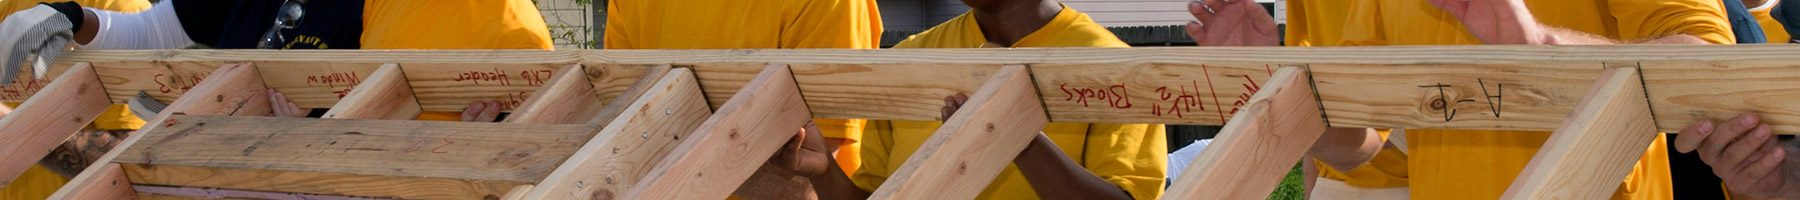 volunteers building a house